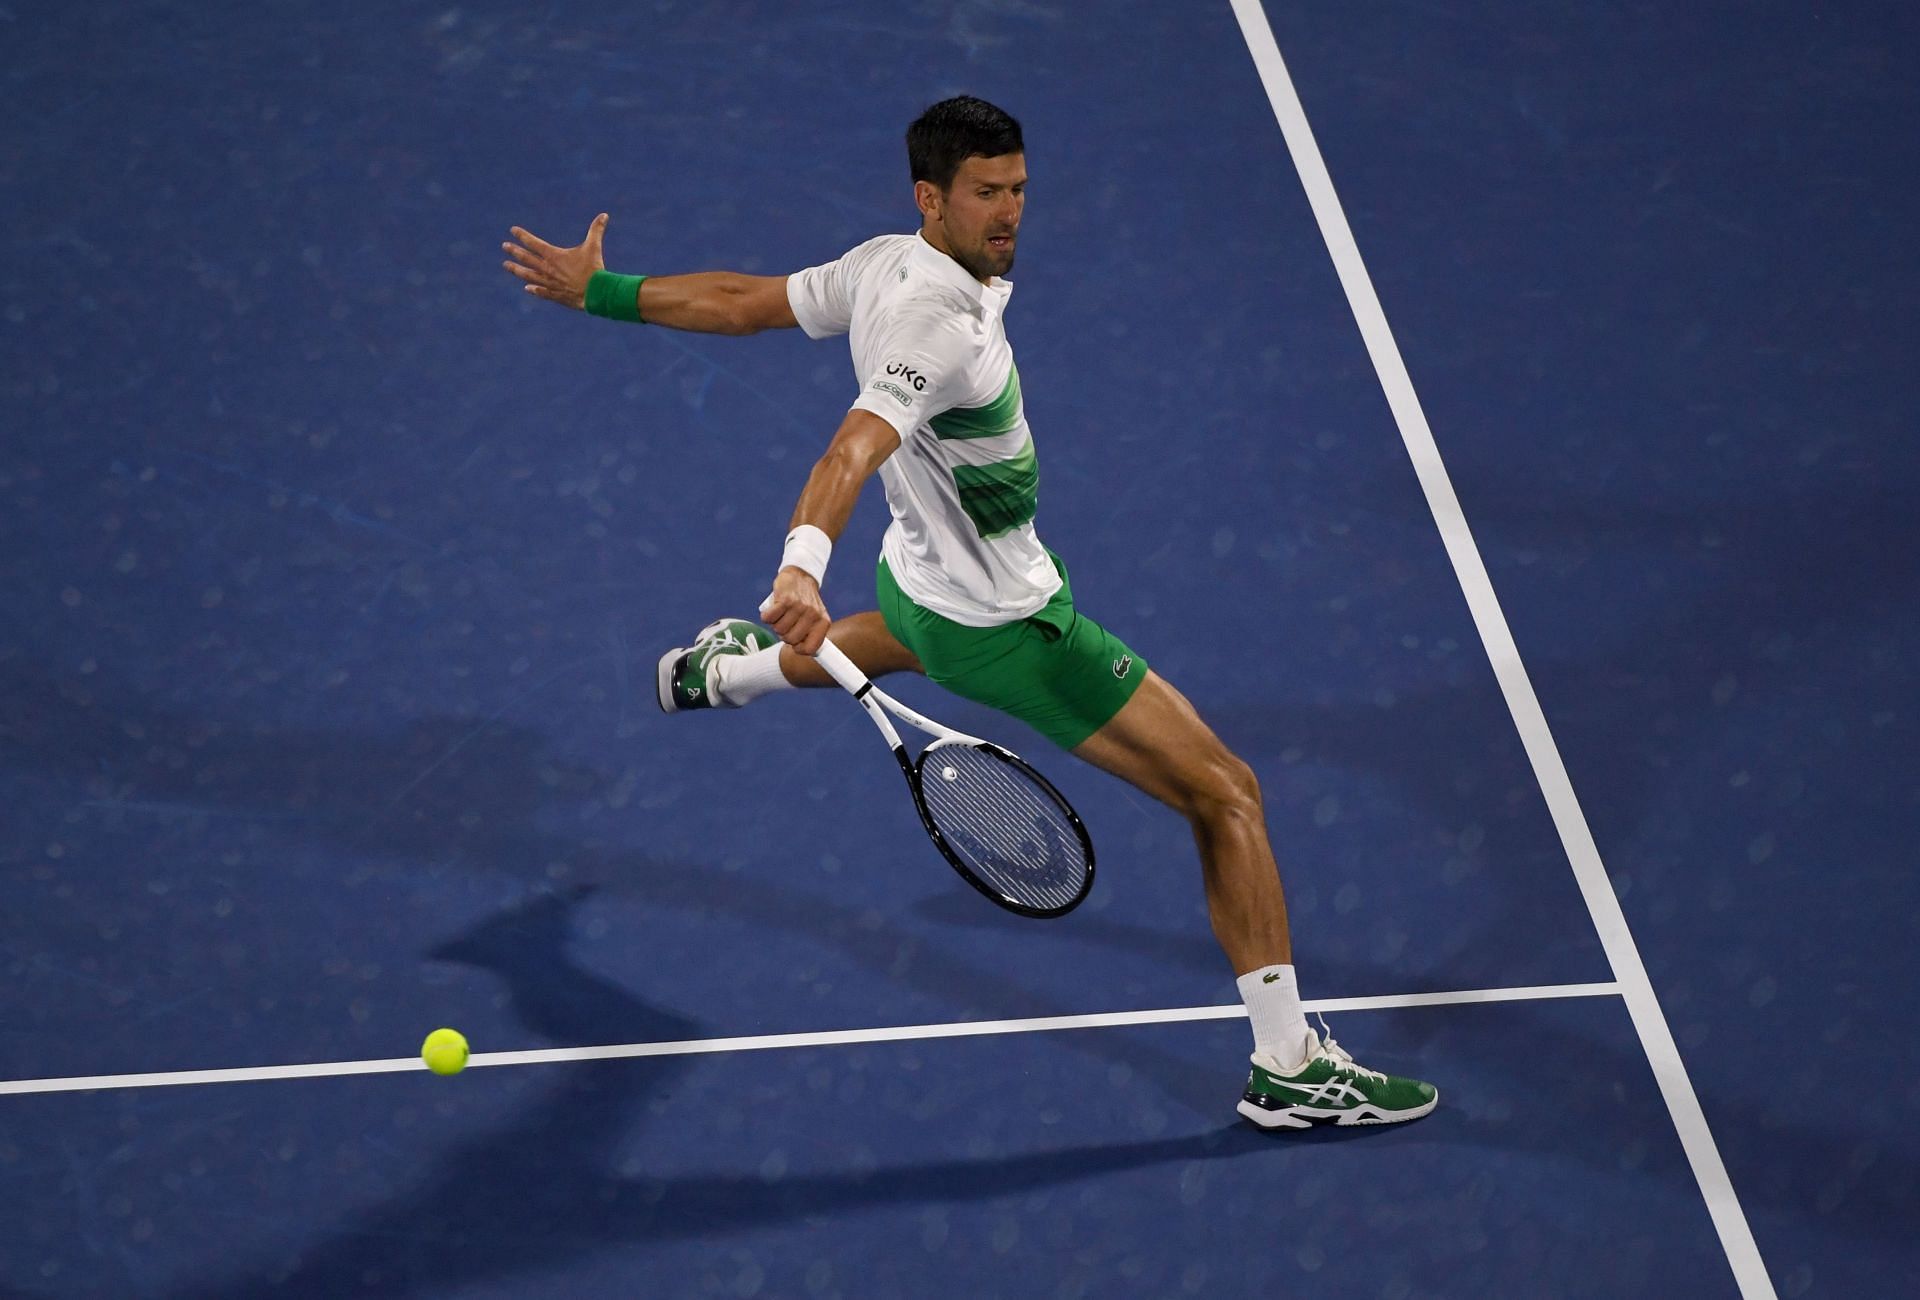 Novak Djokovic will compete in the Monte Carlo Masters